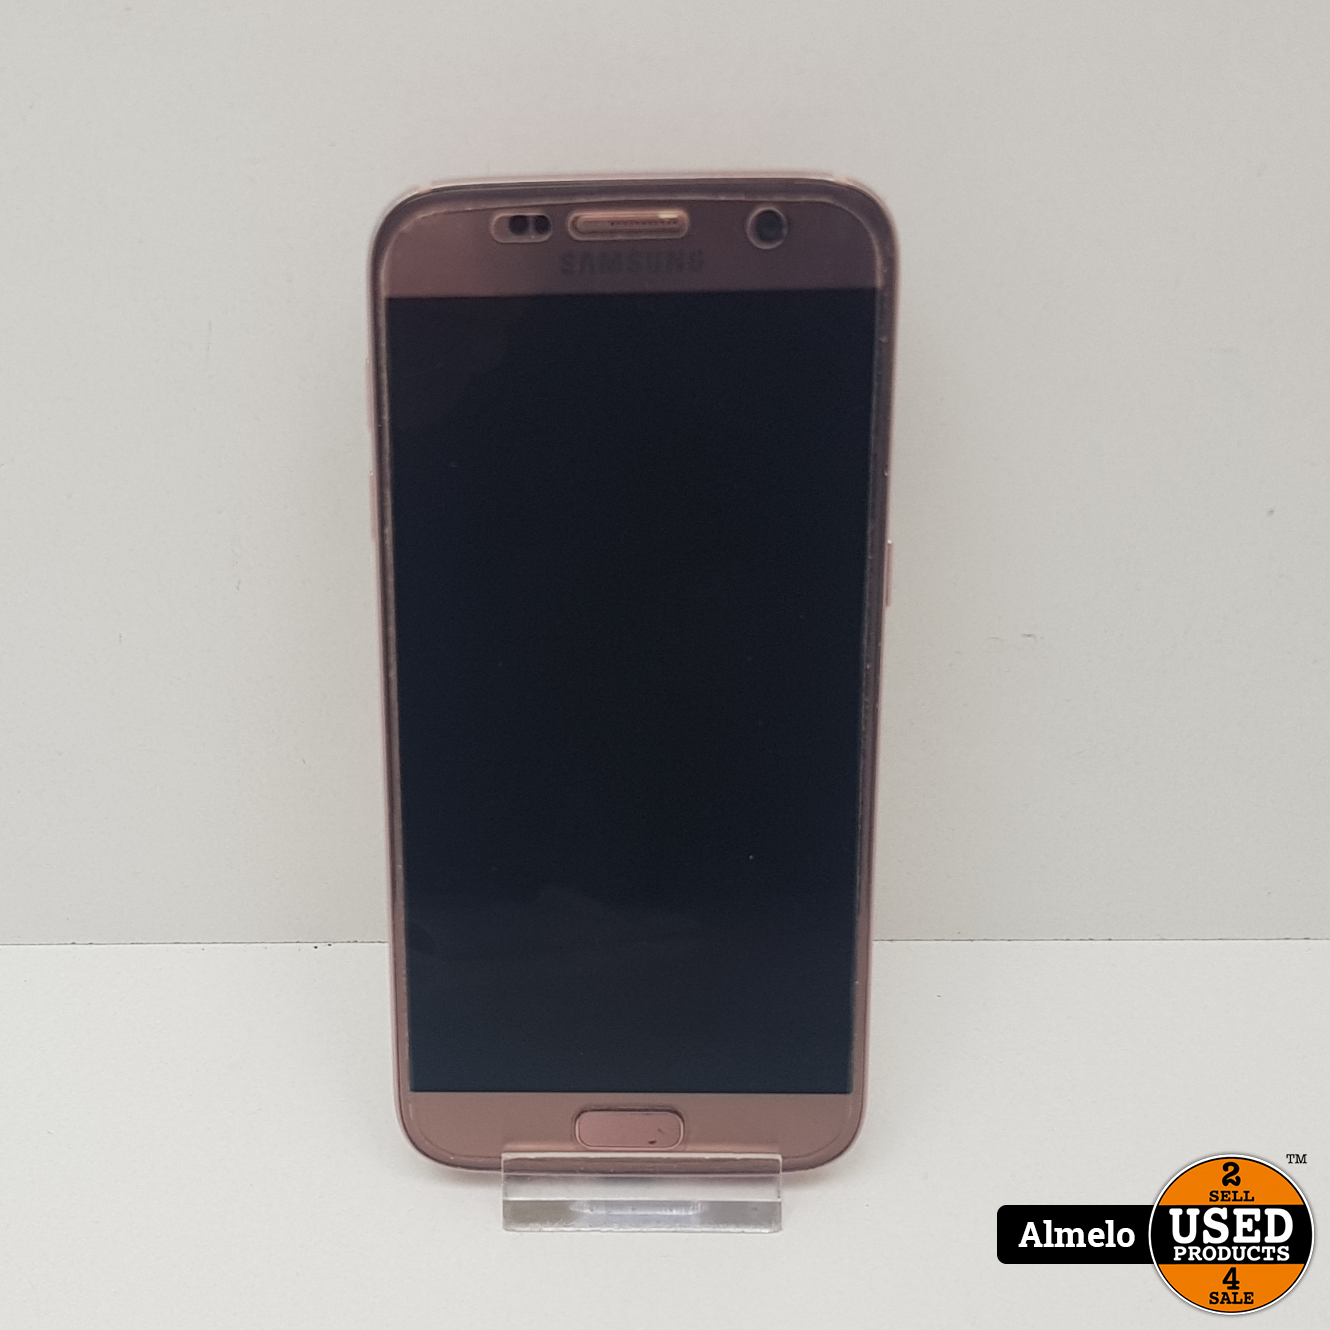 Samsung Galaxy S7 Gold 32GB - Used Almelo